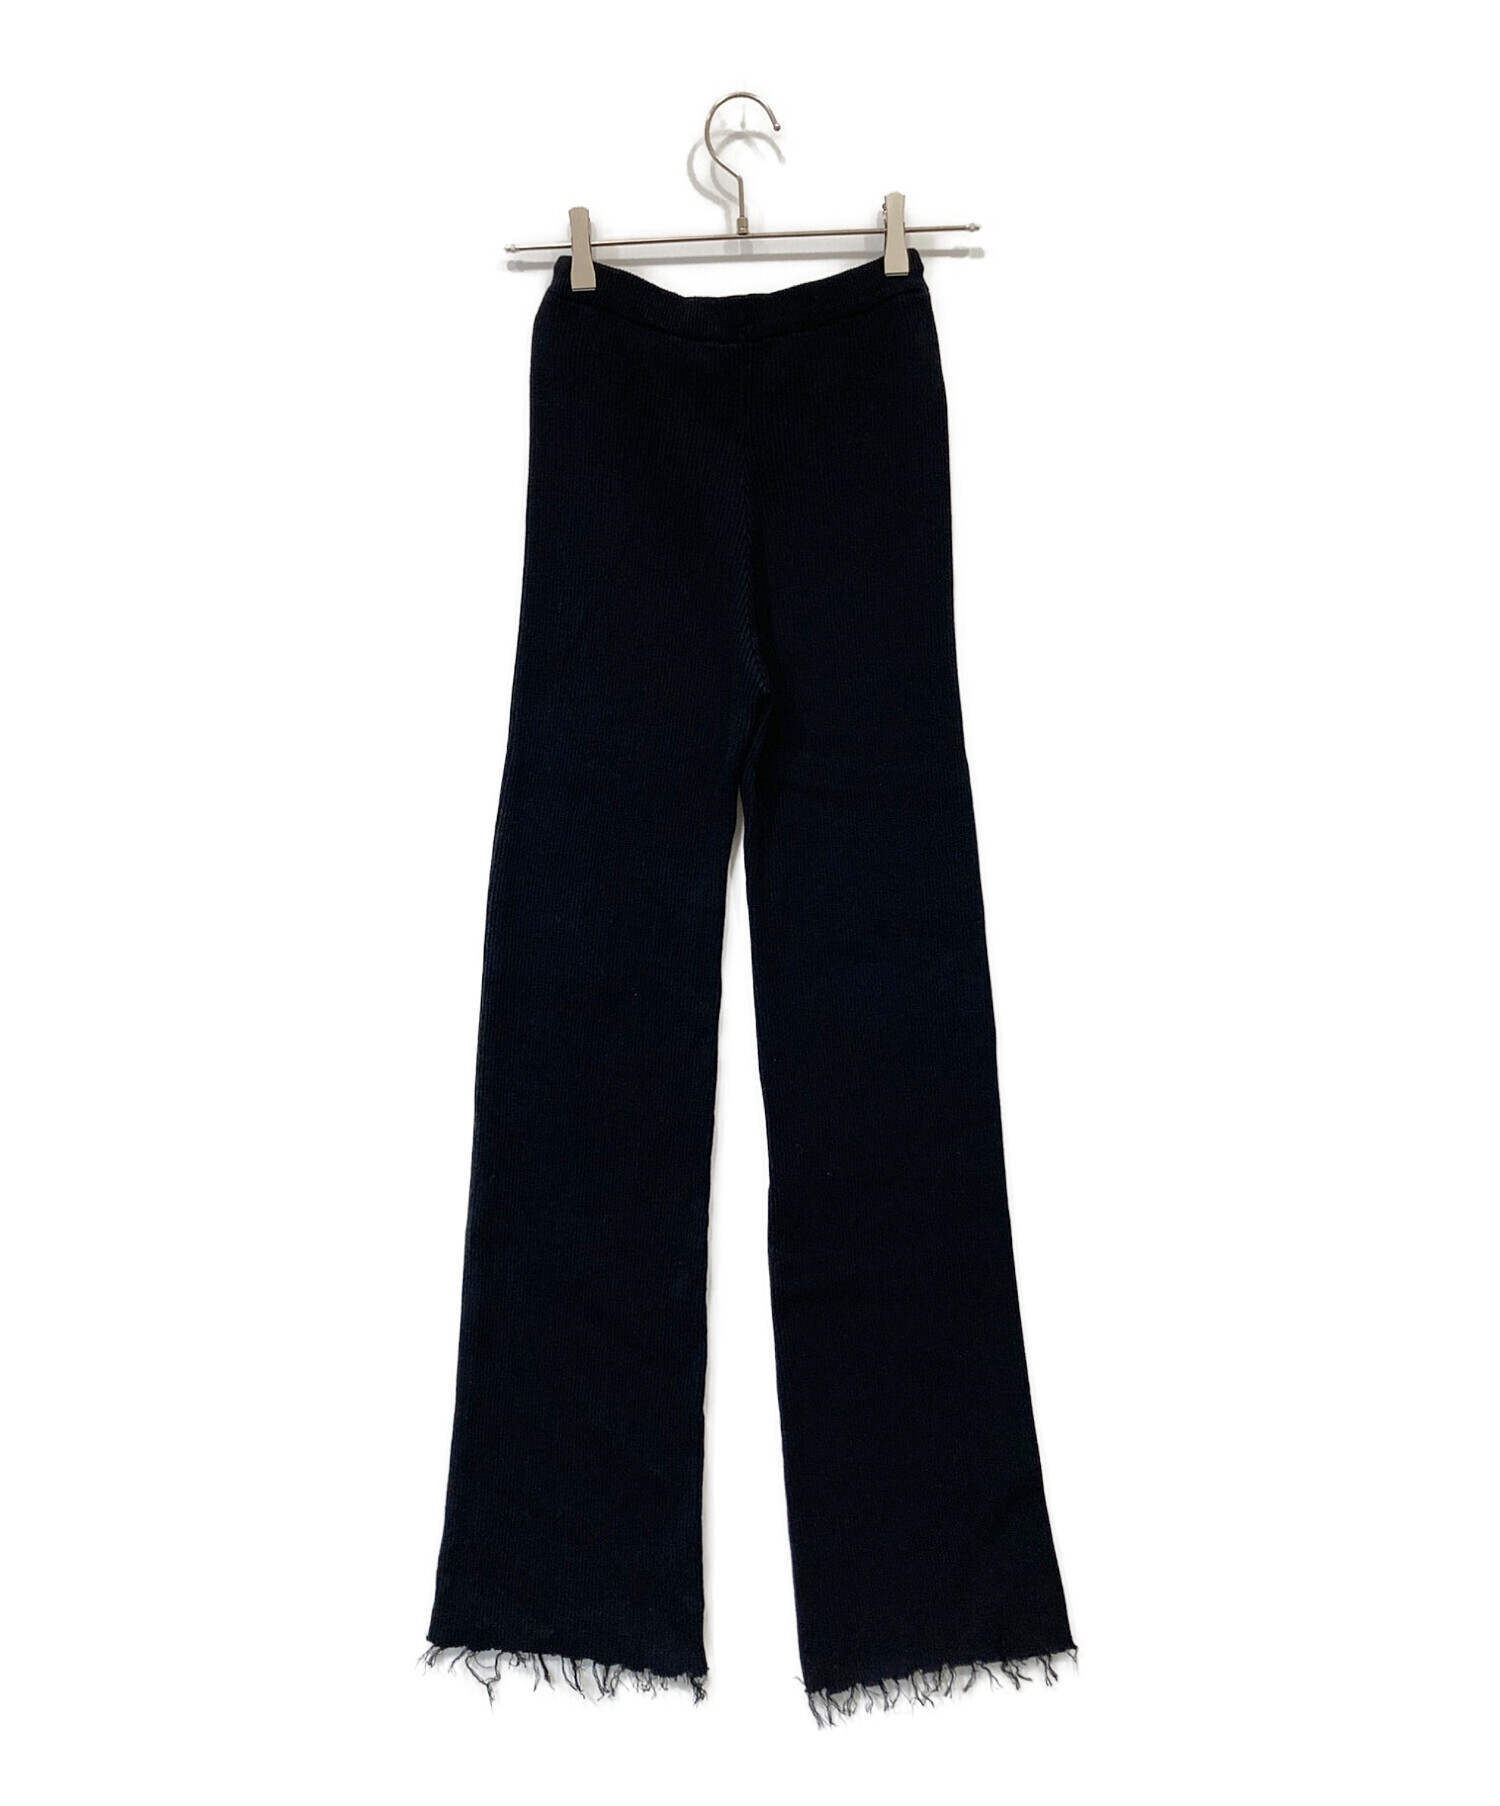 PERVERZE (パーバーズ) Cotton Rib Line Pants ブラック サイズ:FREE